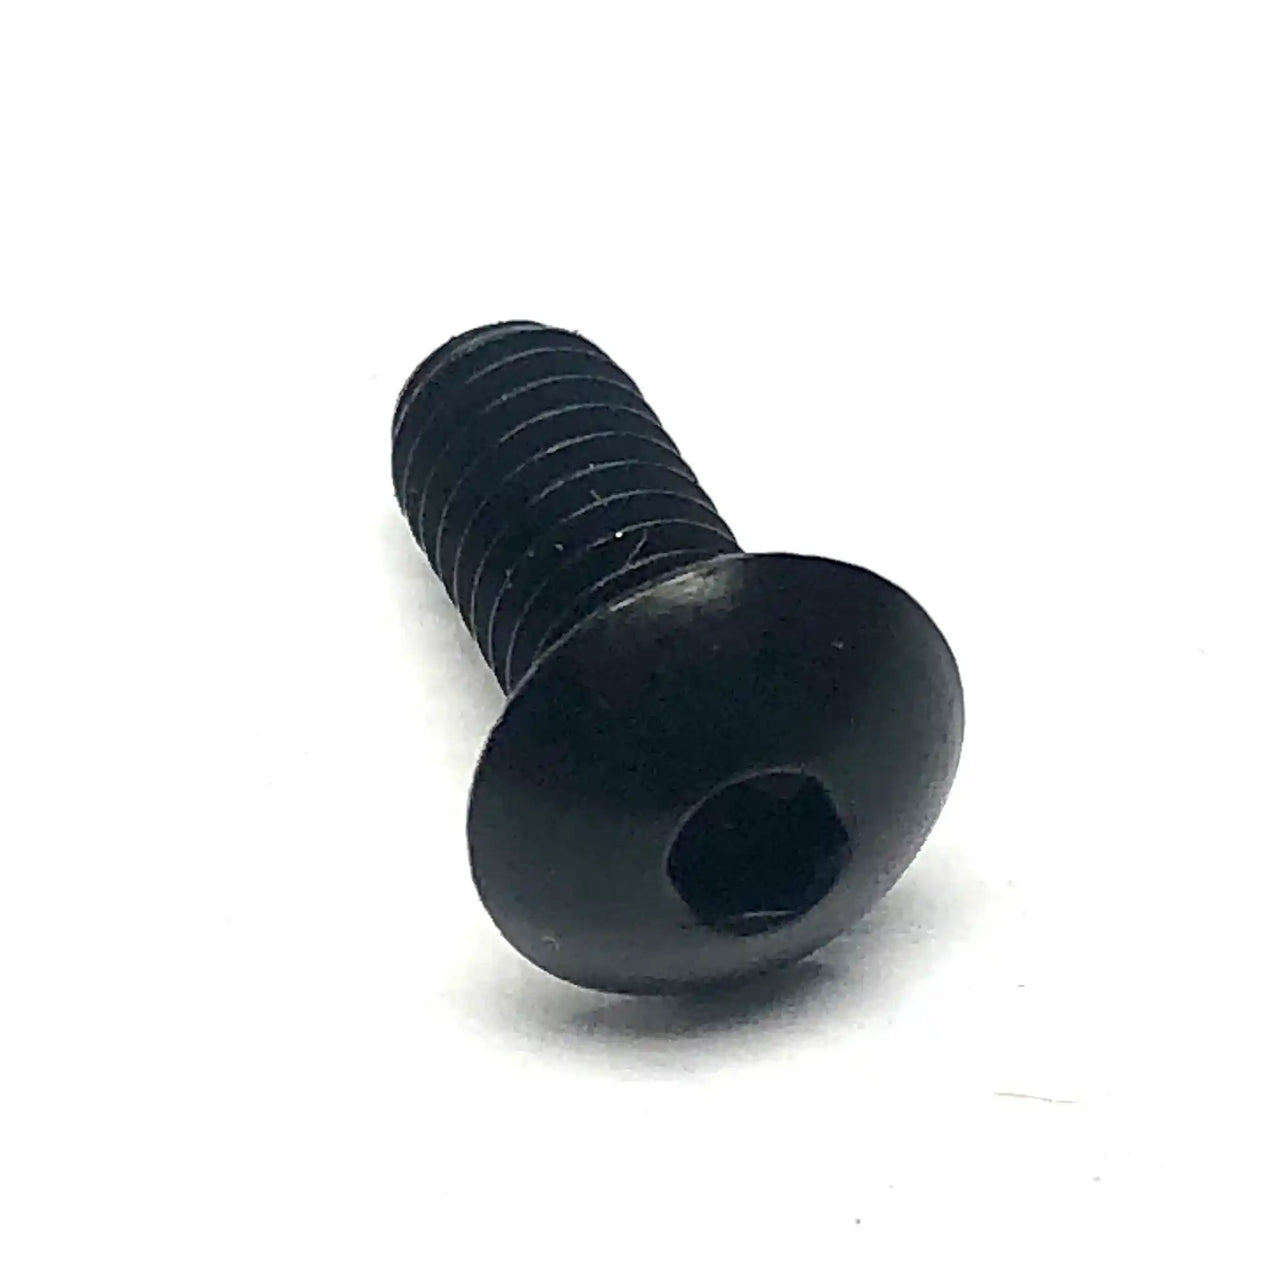 8-32 Aluminum Black Button Head Fasteners (10pk)